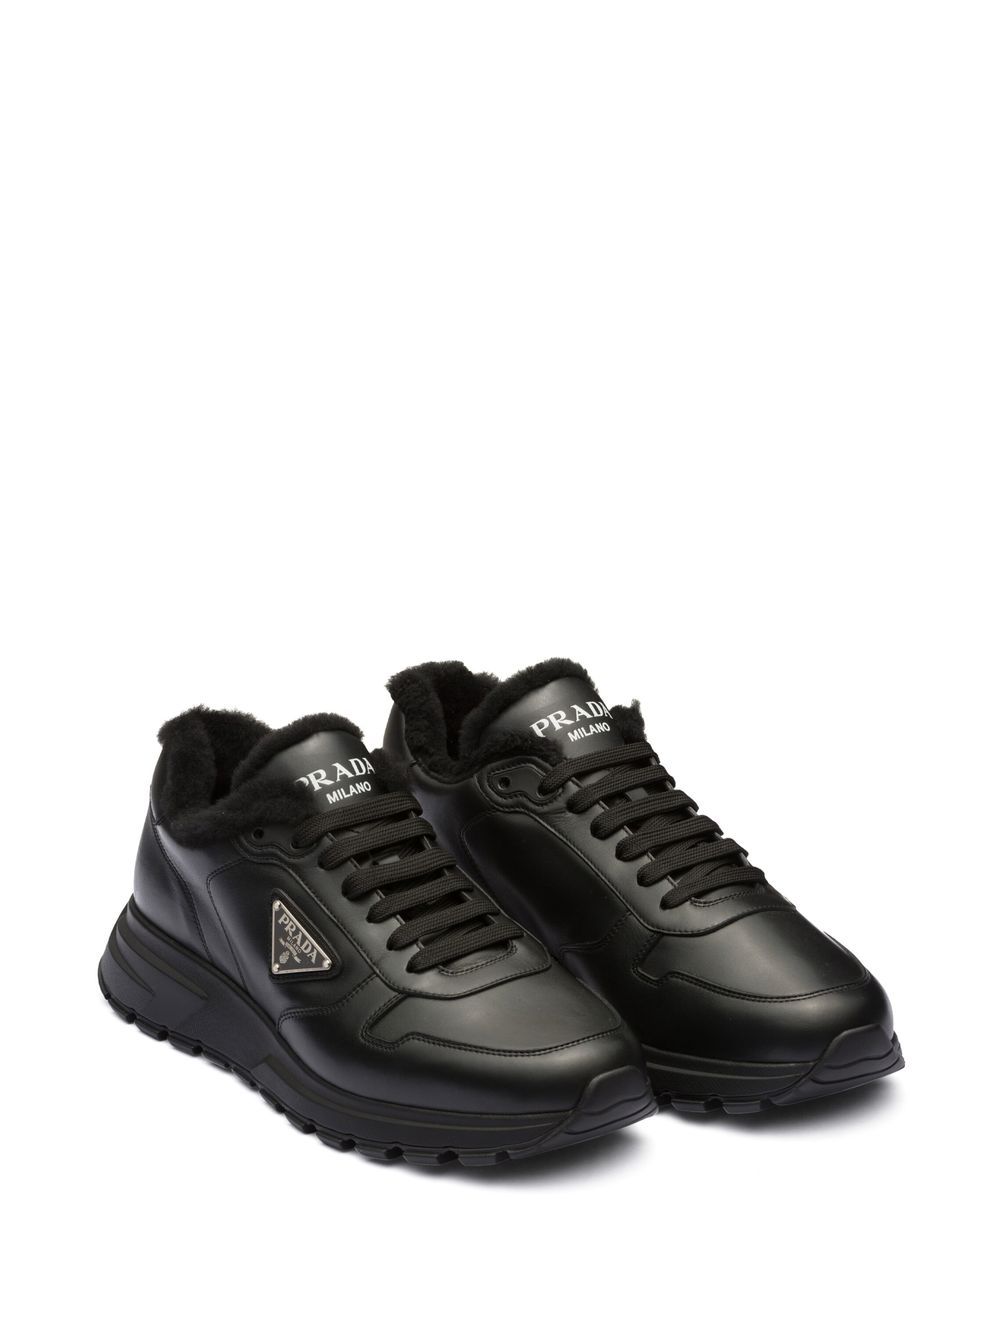 Image 2 of Prada logo leather sneakers